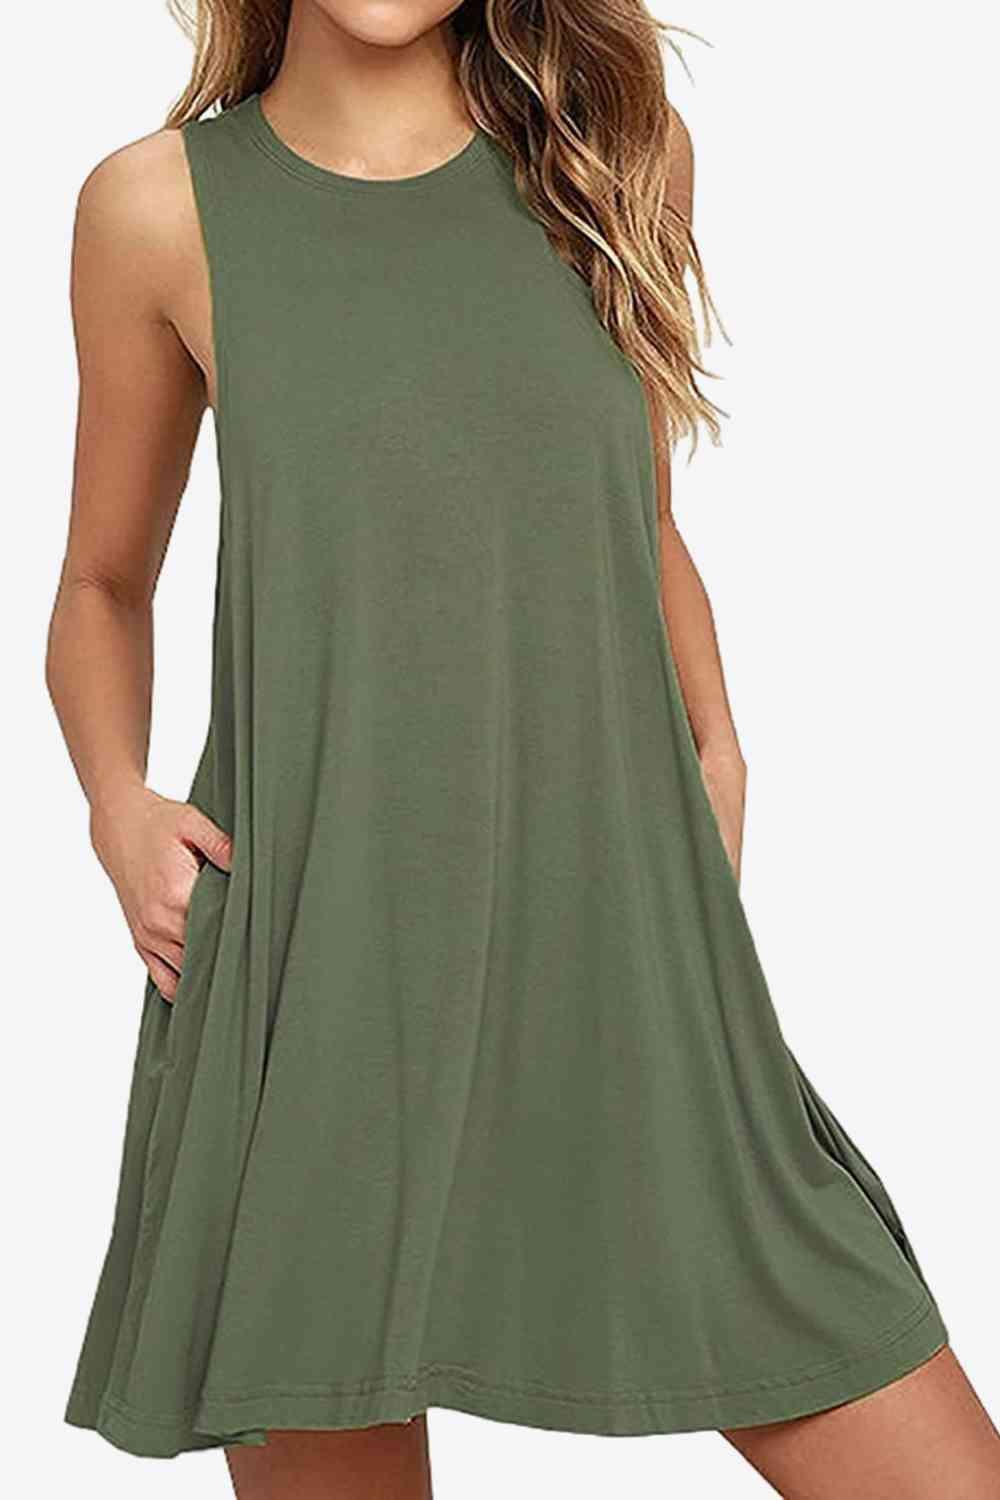 Full Size Round Neck Sleeveless Dress with Pockets - Immenzive